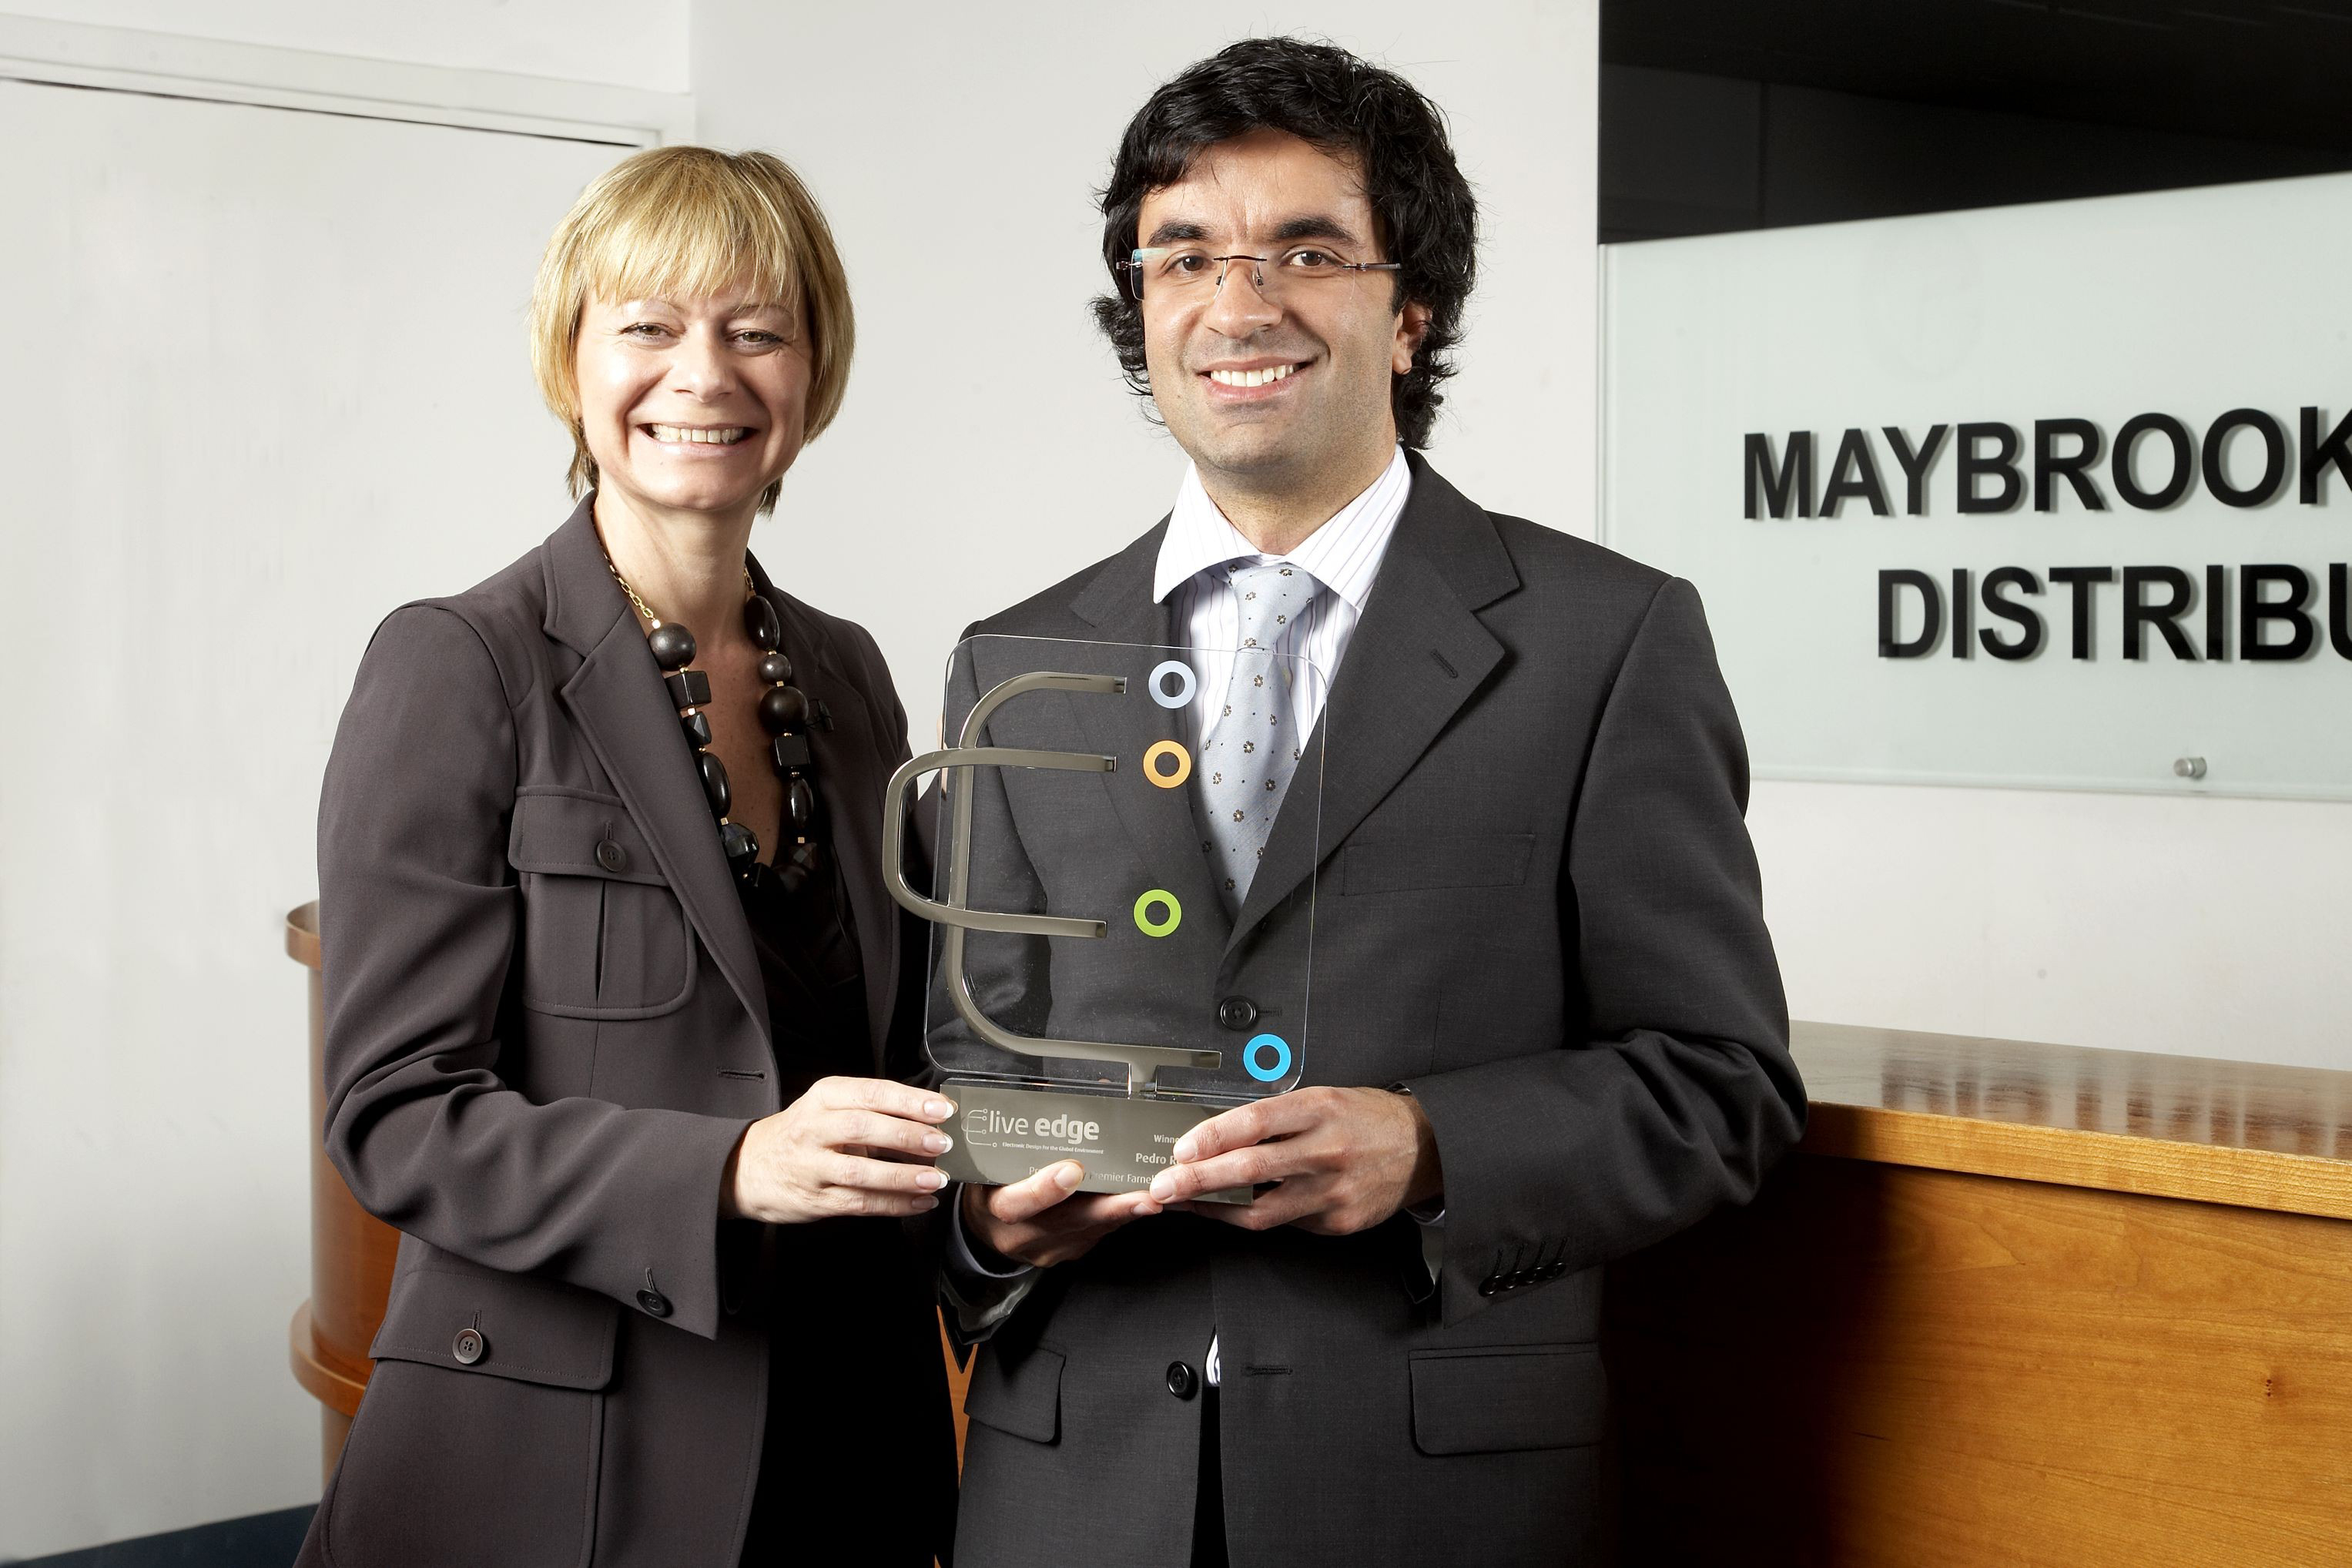 Pedro Rodrigues, vencedor do Live EDGE 2008, recebe o seu prémio de Harriet Green, Presidente da Premier Farnell.